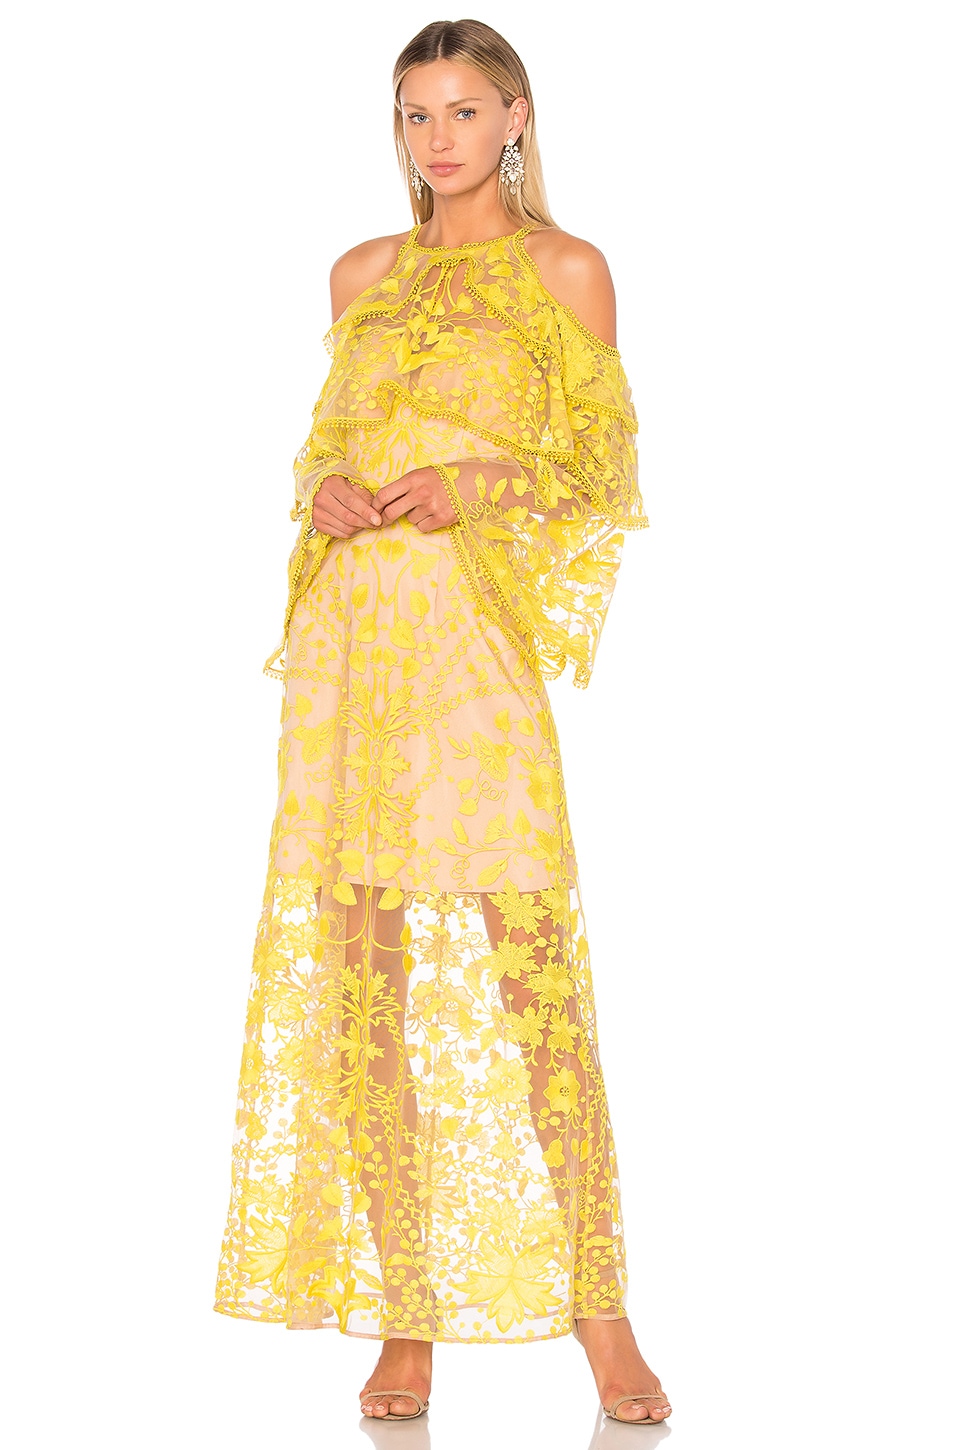 revolve marigold dress